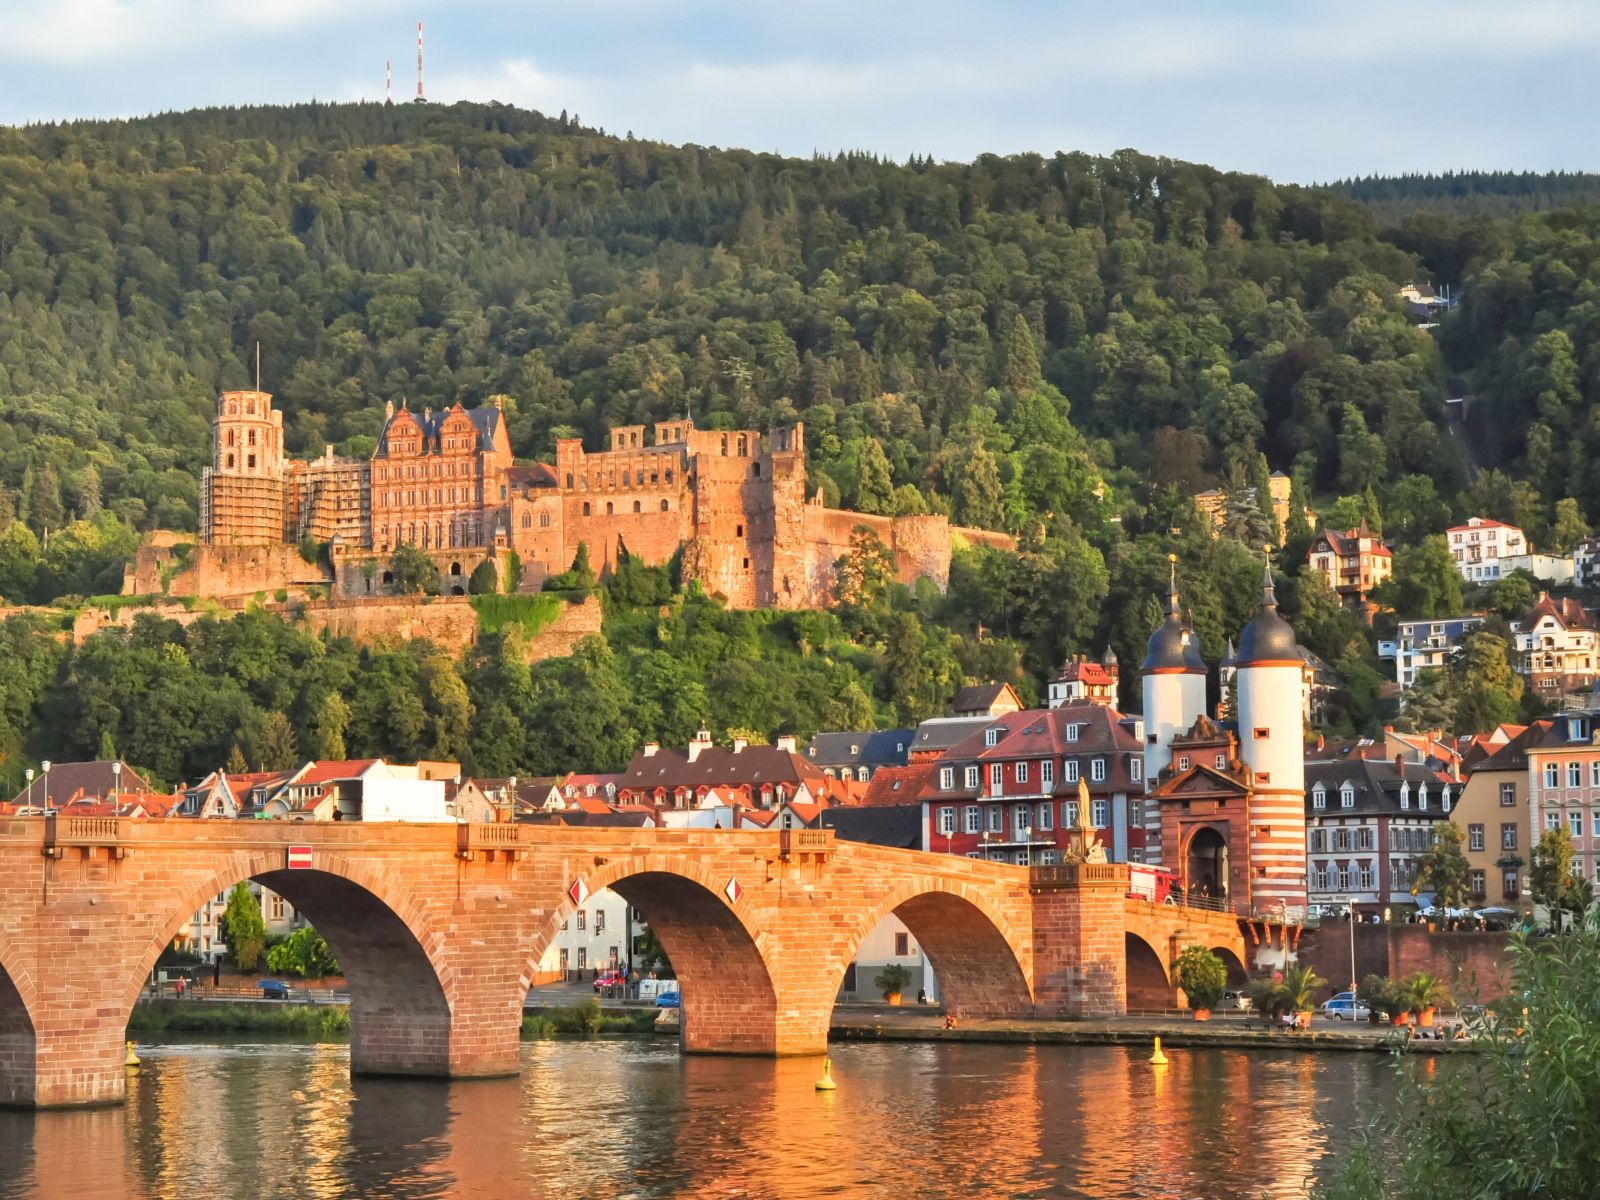 Heidelberg Bridge and Castle